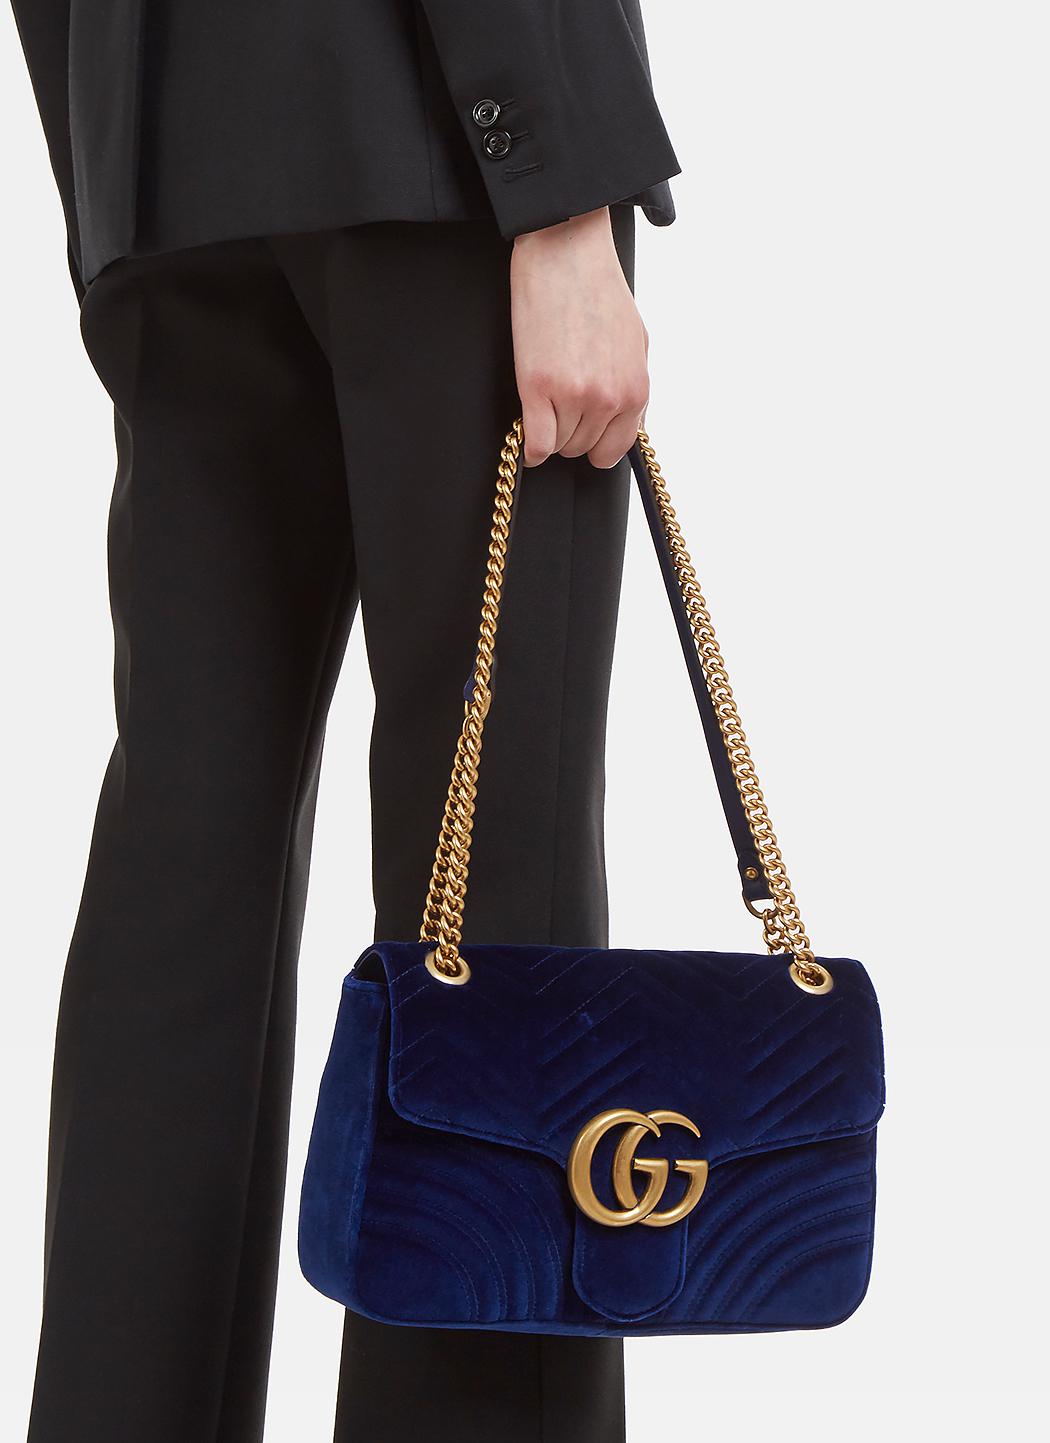 Gucci RARE Blue Velvet Matelasse GG Marmont MODERN Shoulder Bag Purse  Crossbody